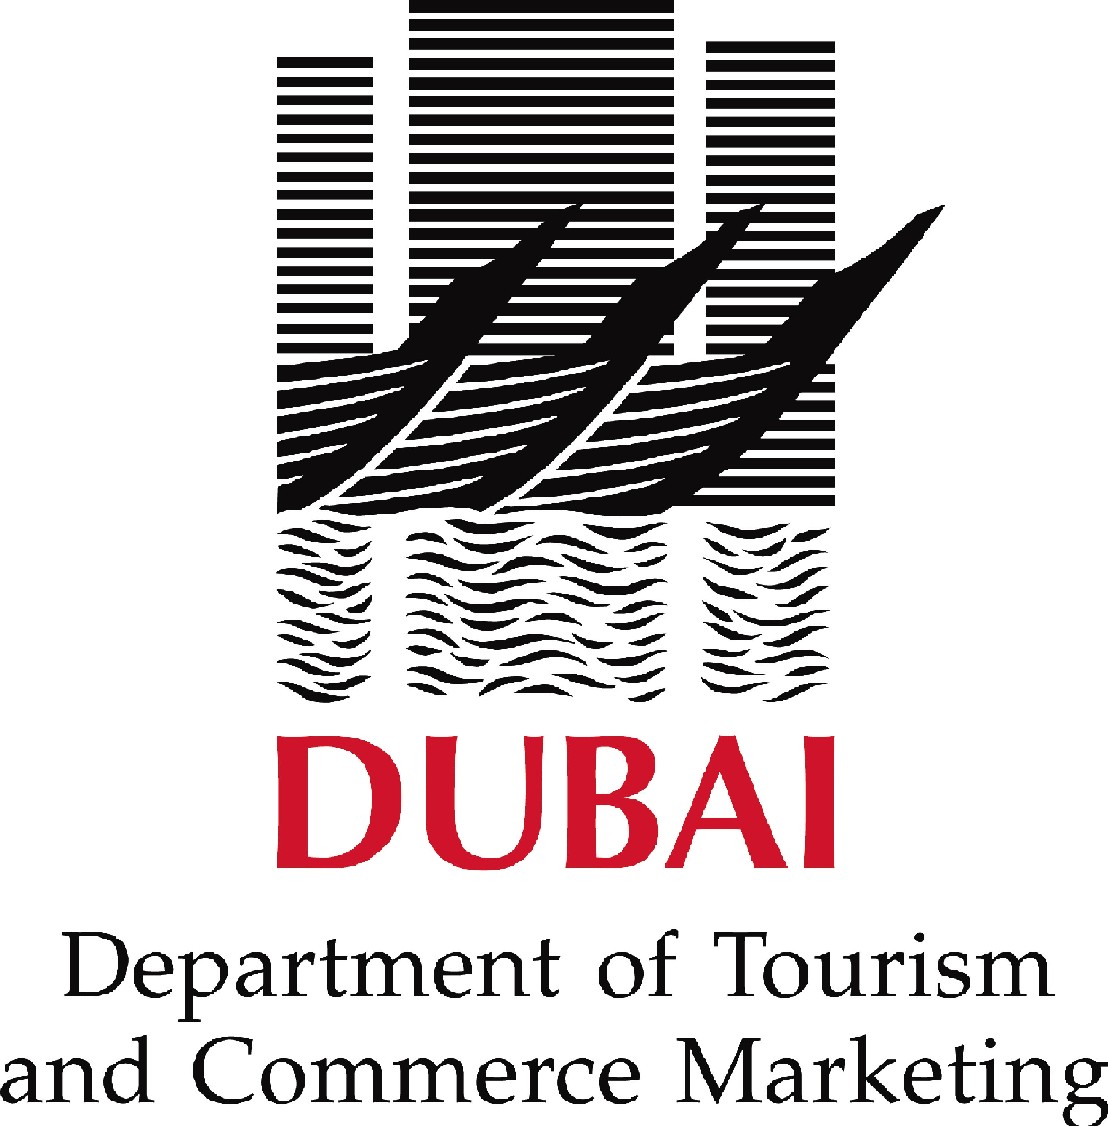 department of culture and tourism dubai